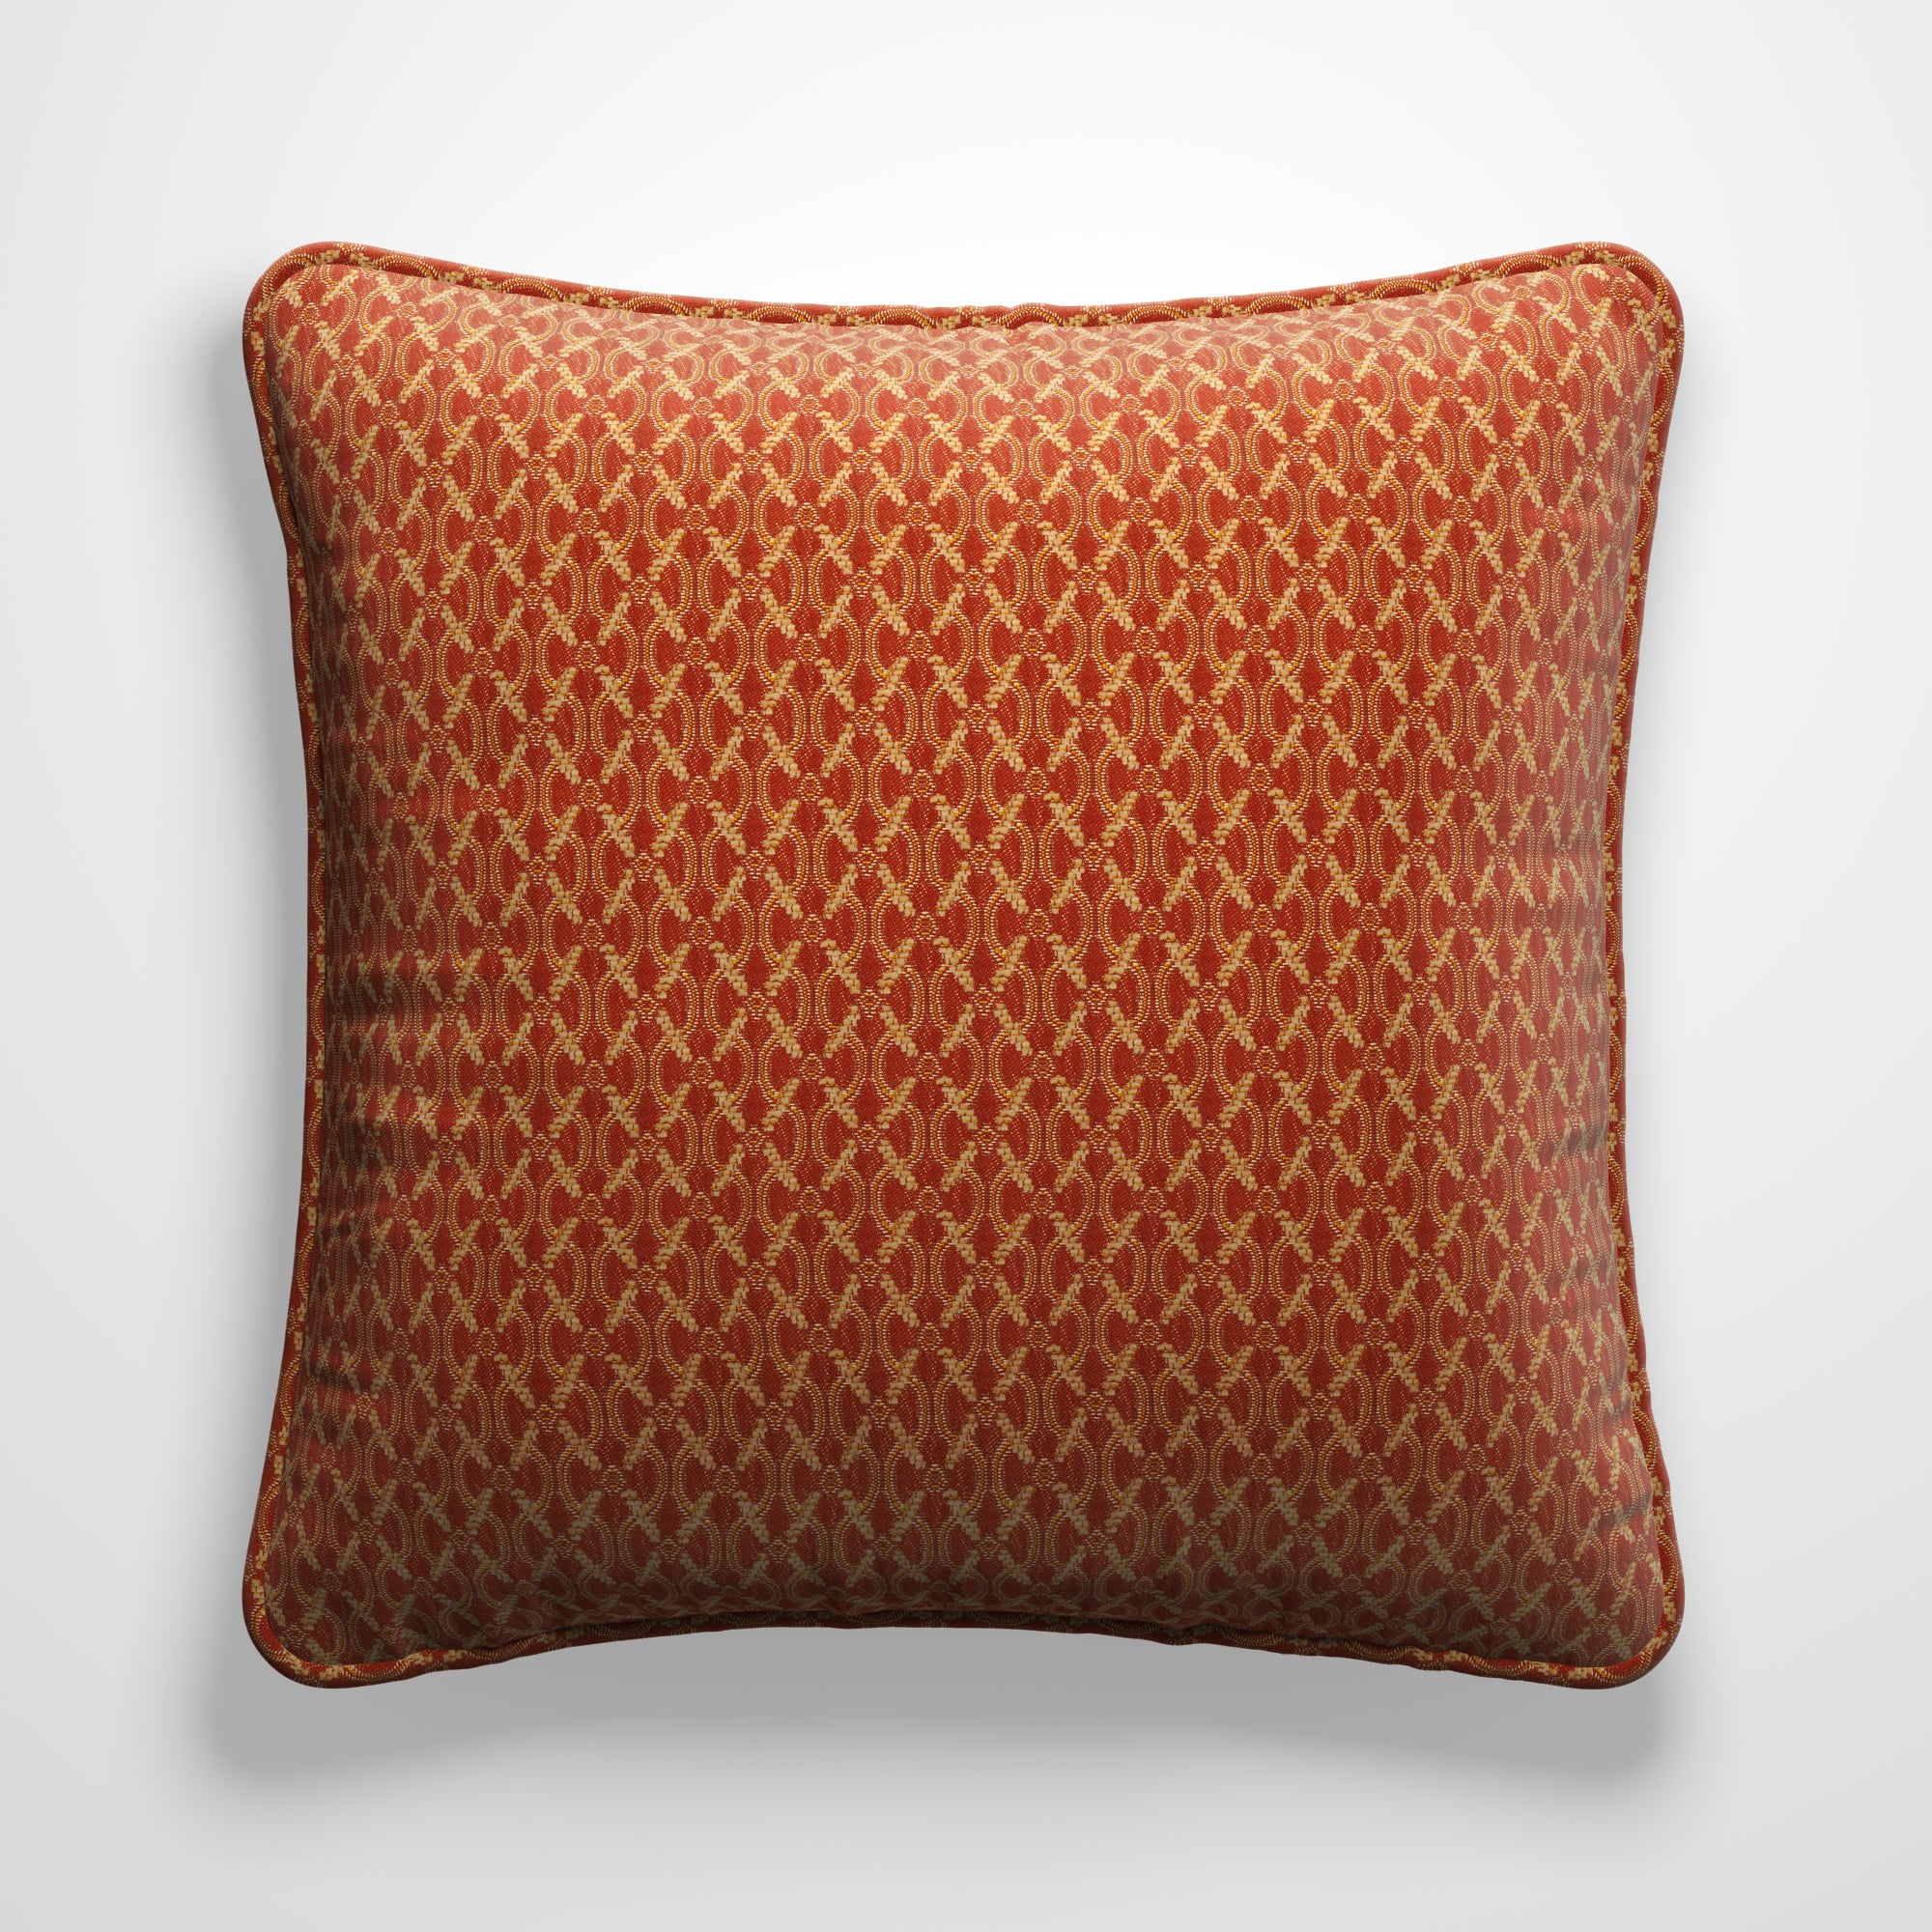 Soho Made to Order Cushion Cover Soho Chenille Terracotta